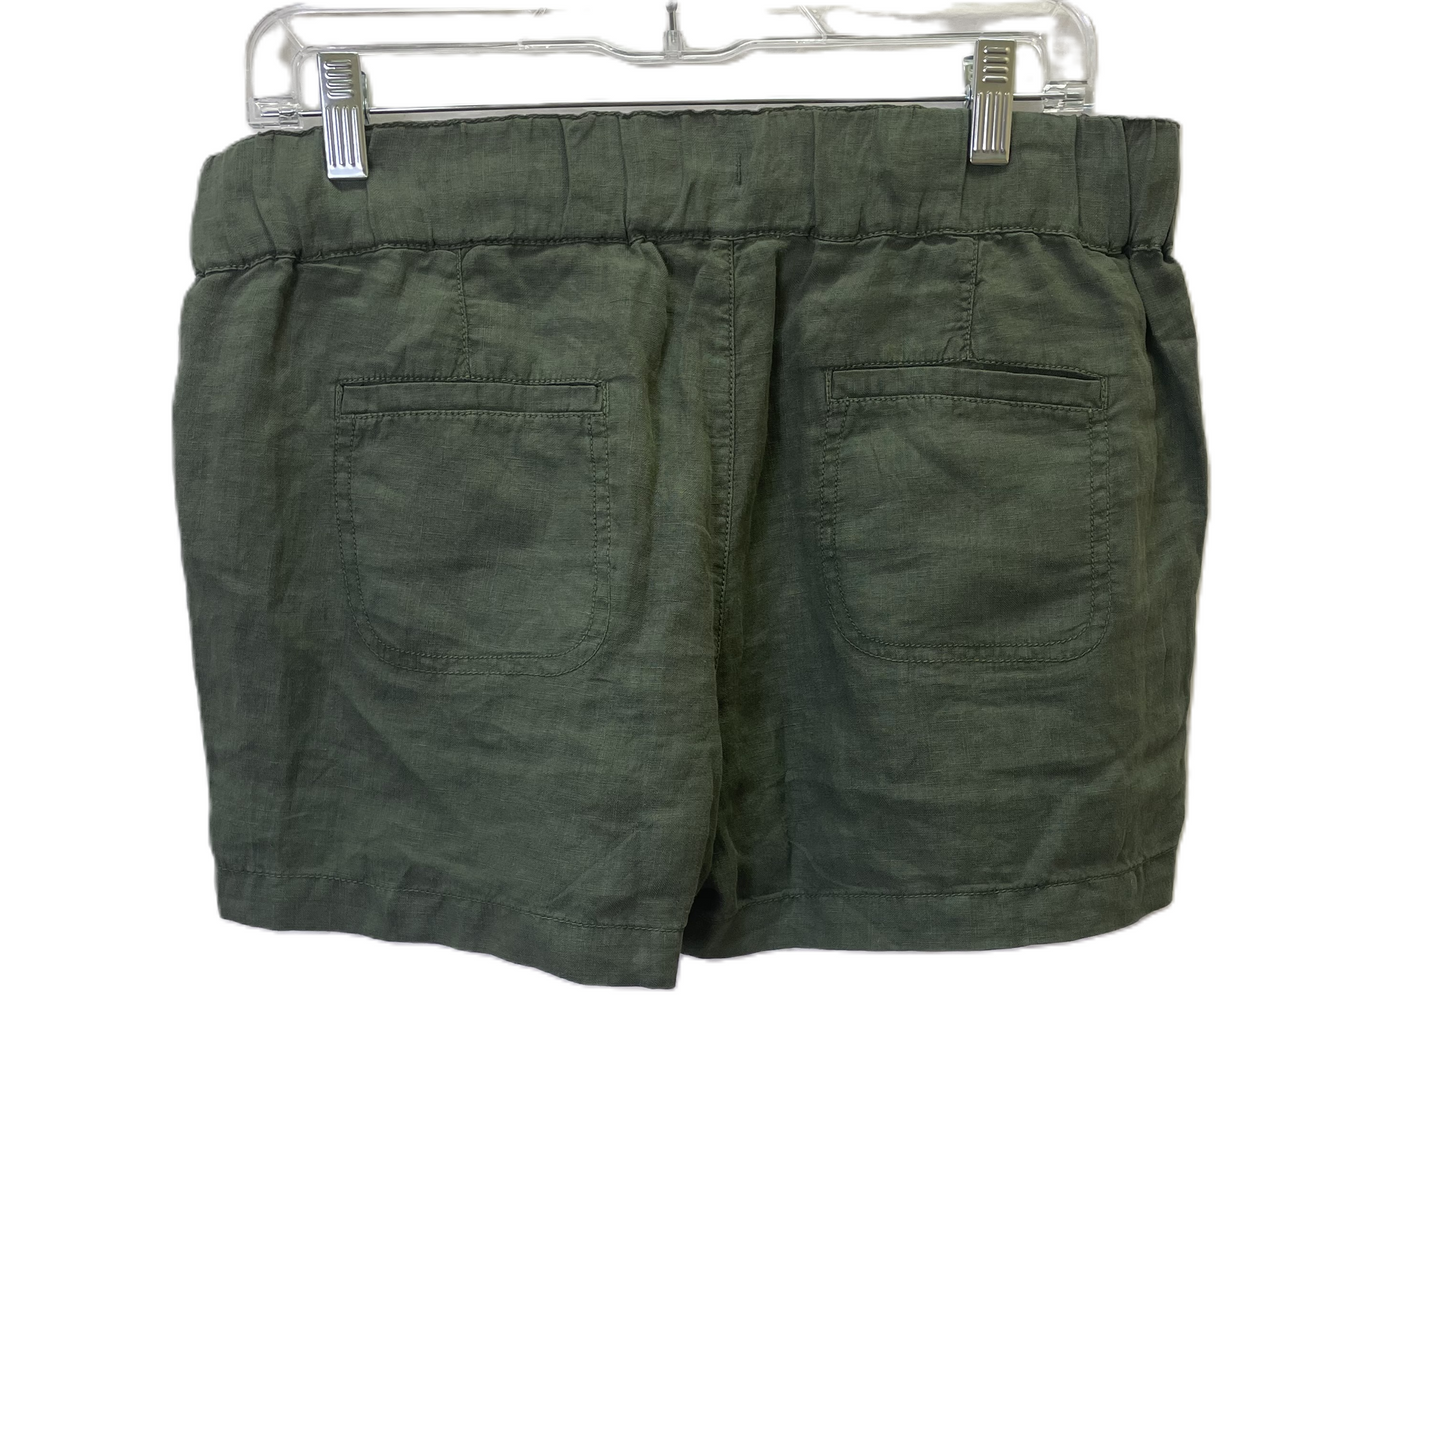 Shorts By Caslon  Size: S